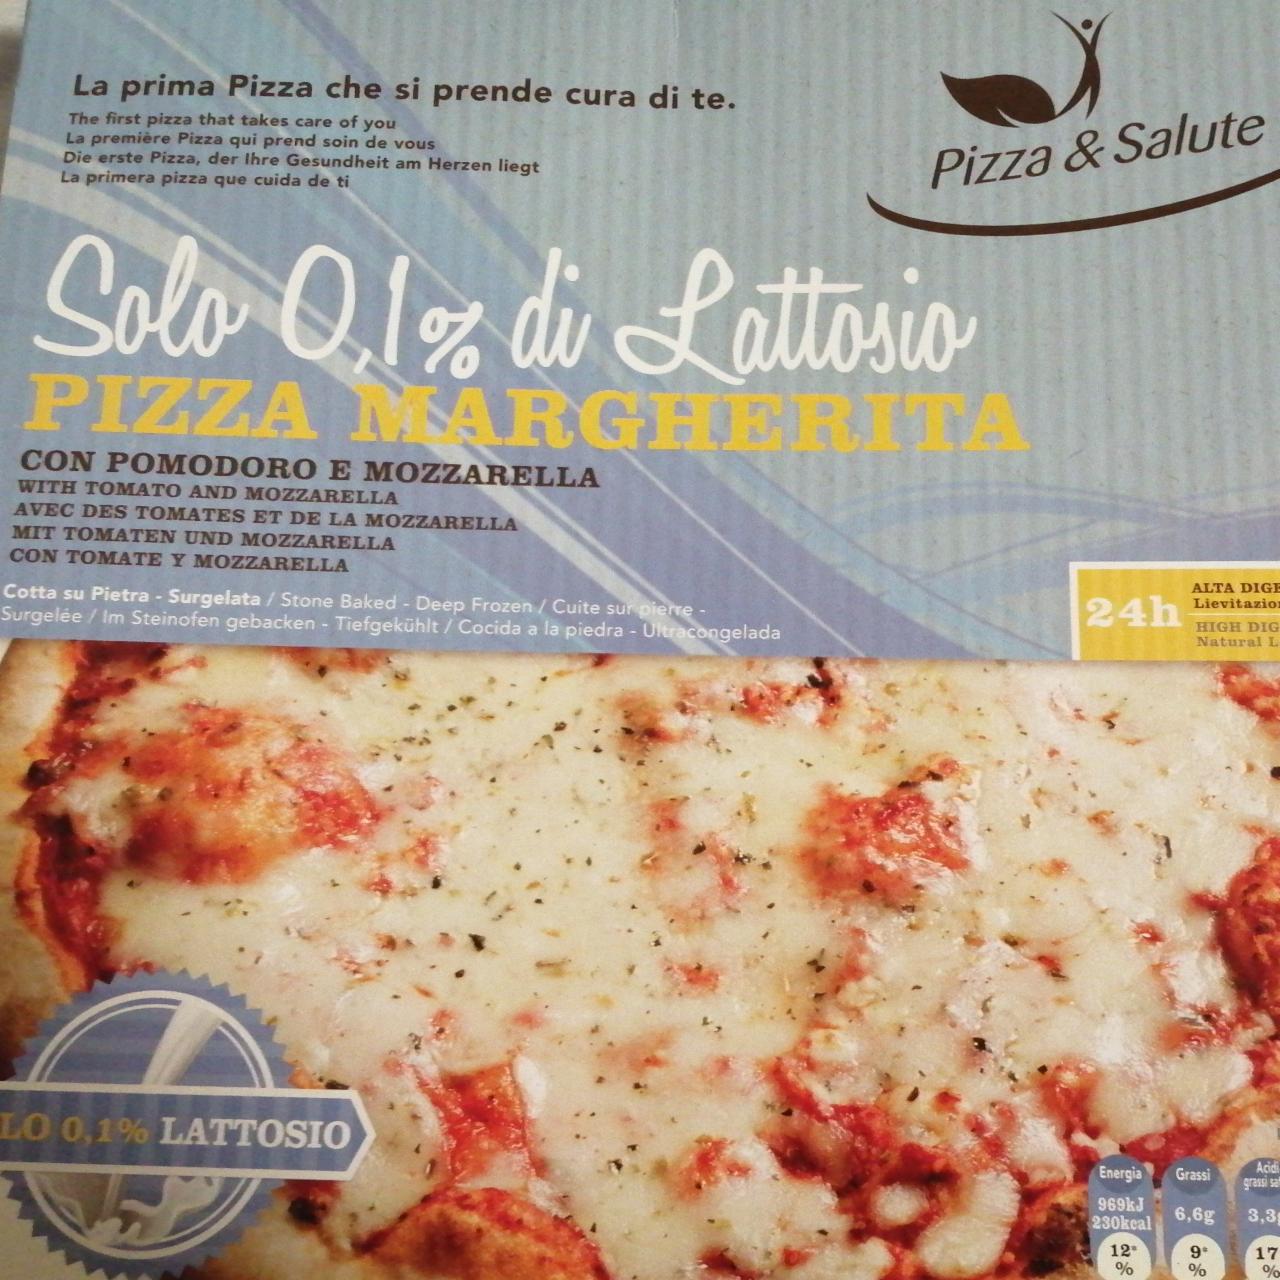 Zdjęcia - Pizza margherita pizza&salute